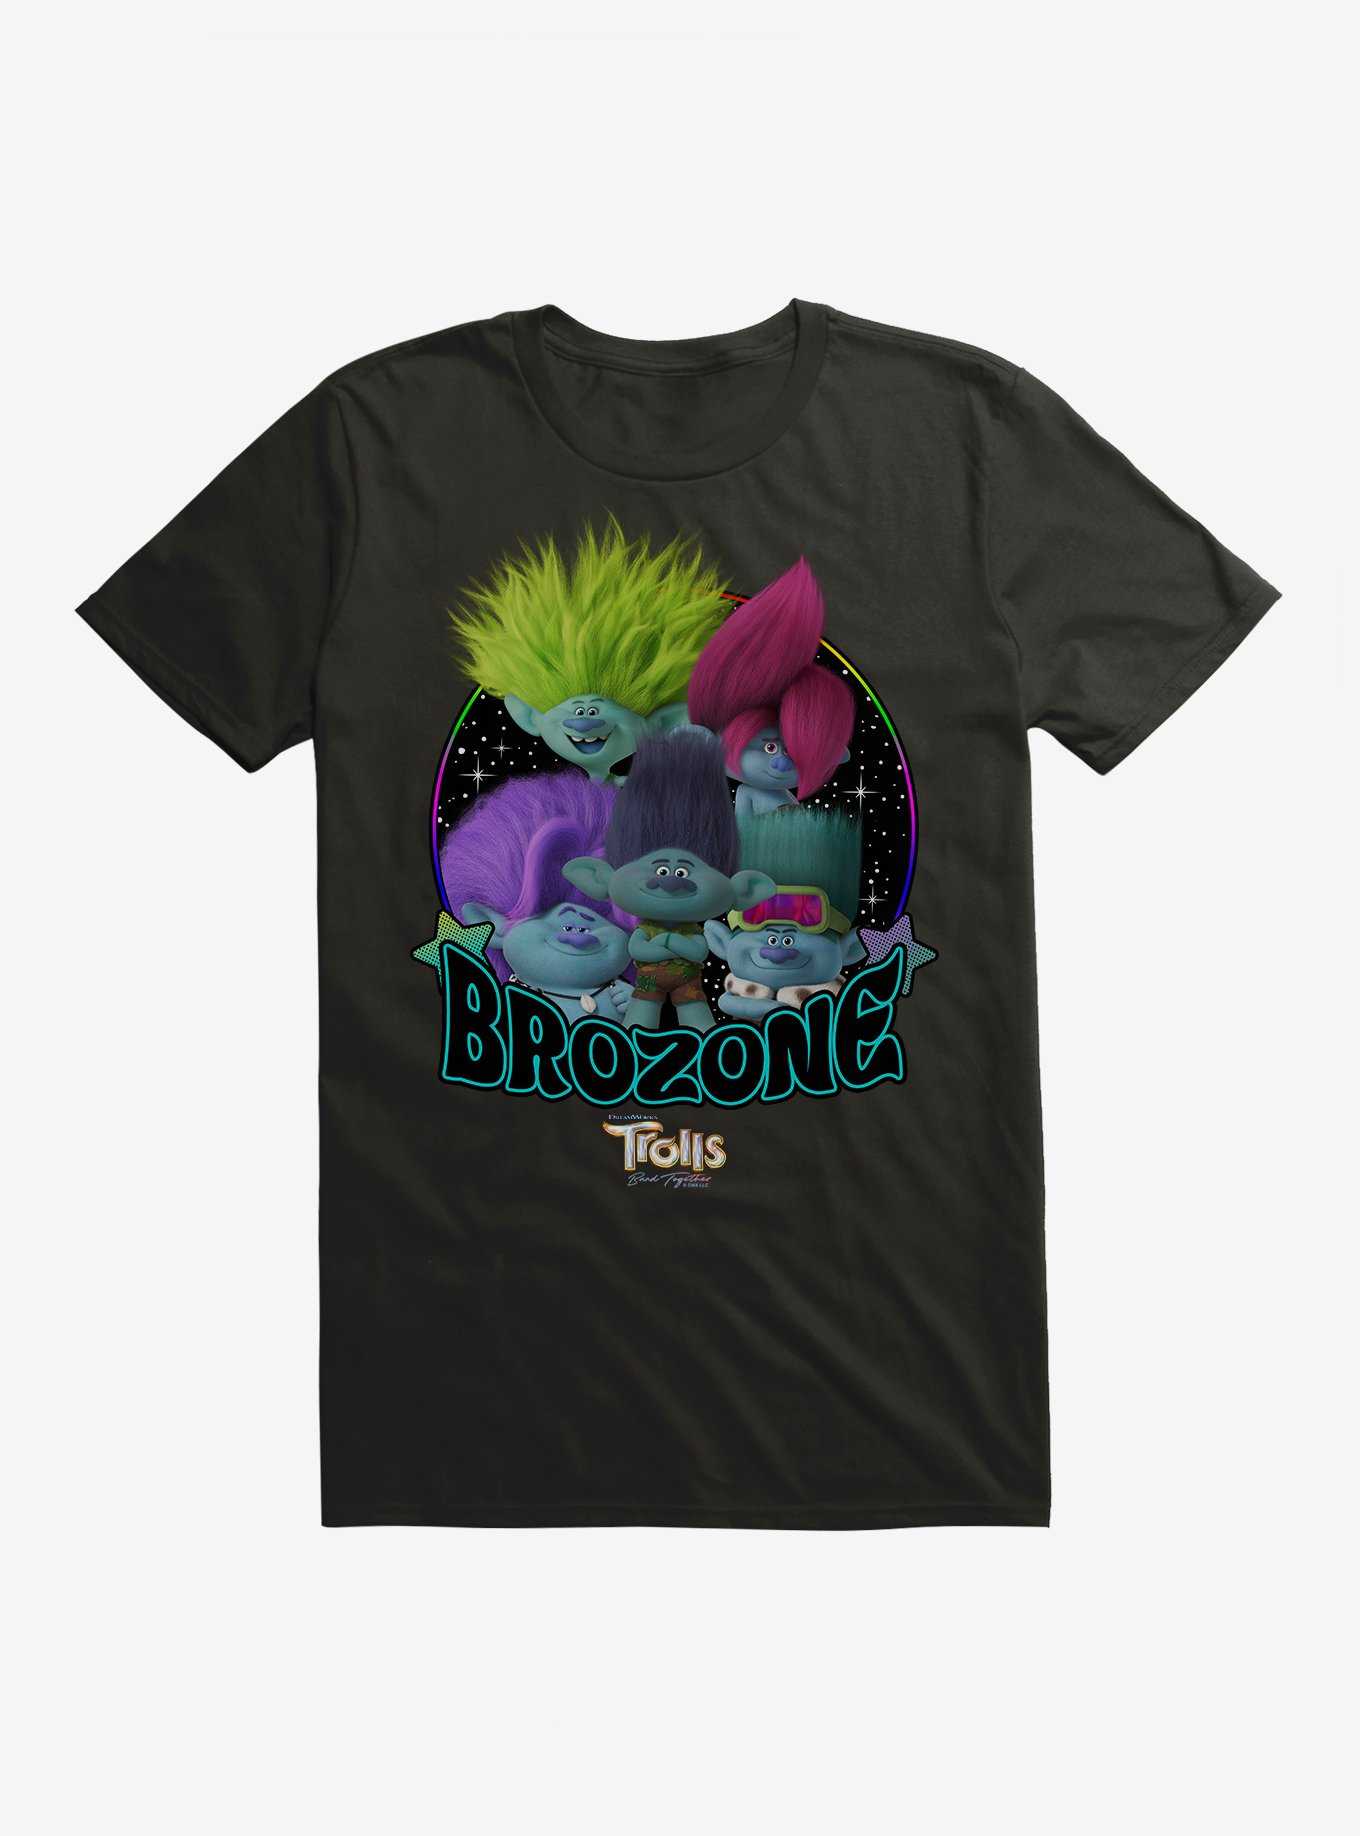 Trolls 3 Band Together Brozone Group T-Shirt, , hi-res